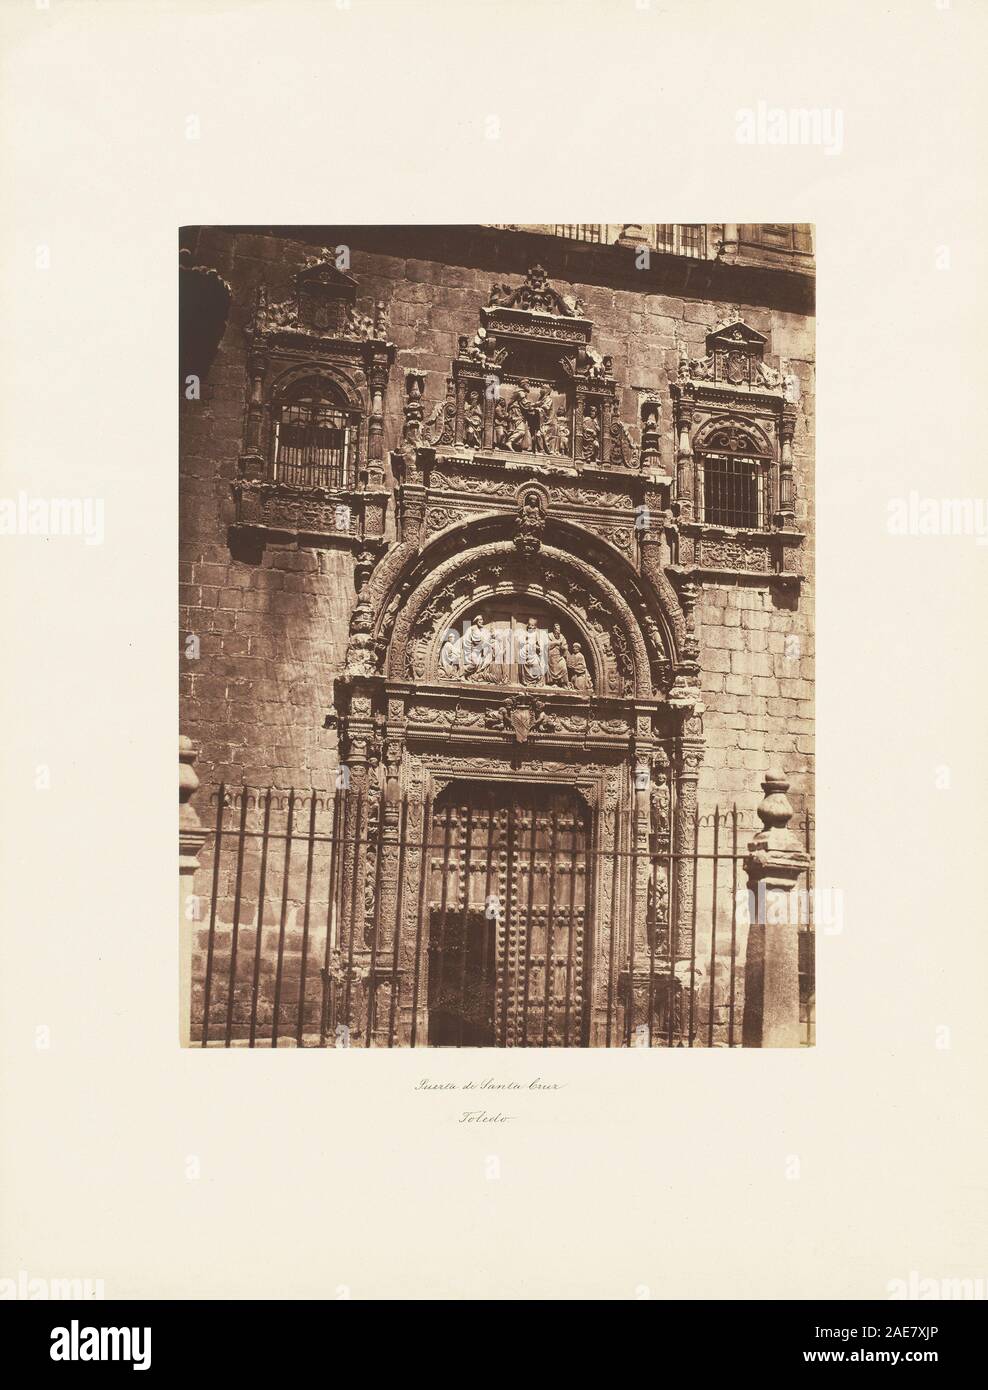 Puerta de Santa Cruz, Toledo; circa 1860 data Charles Clifford, Puerta de Santa Cruz, Toledo, c 1860 Foto Stock